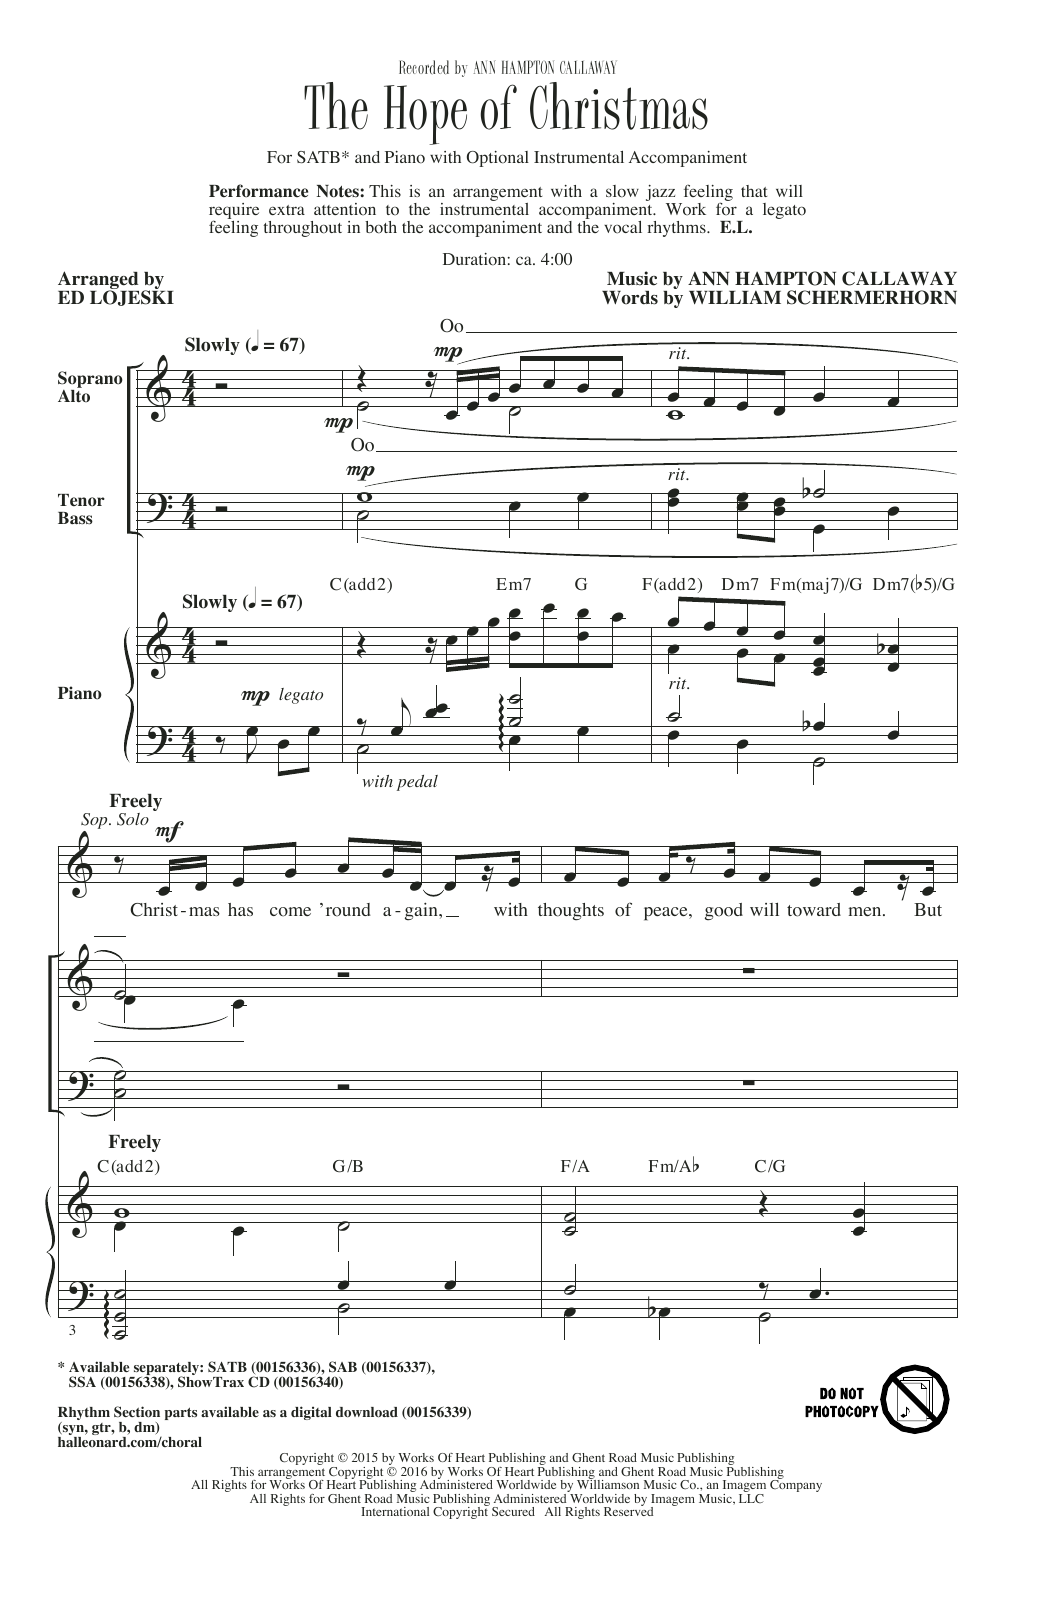 The Hope Of Christmas sheet music